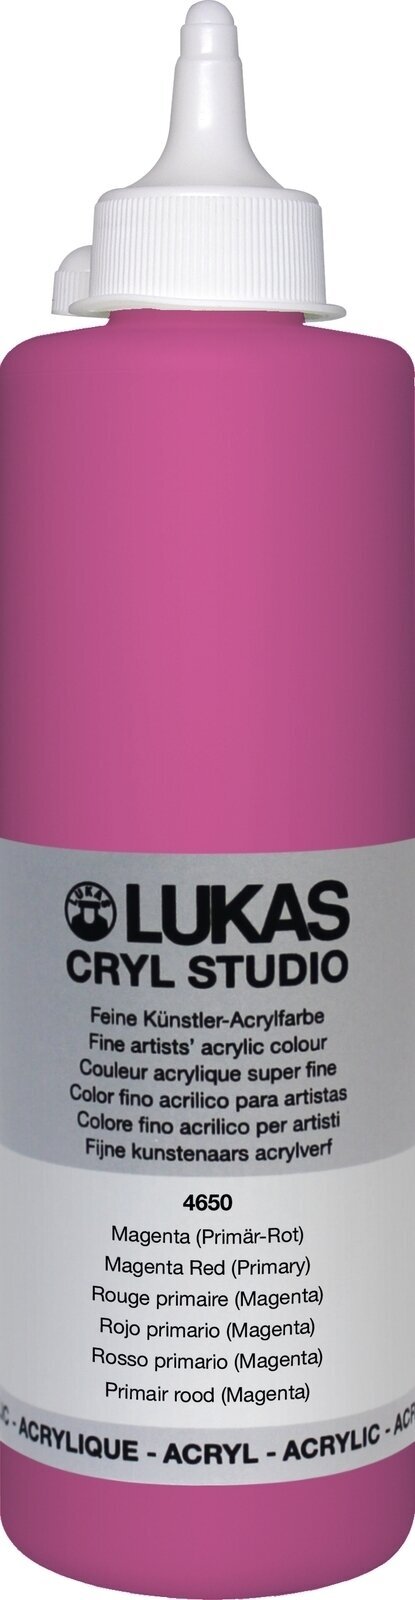 Peinture acrylique Lukas Cryl Studio Peinture acrylique 500 ml Magenta Red (Primary)